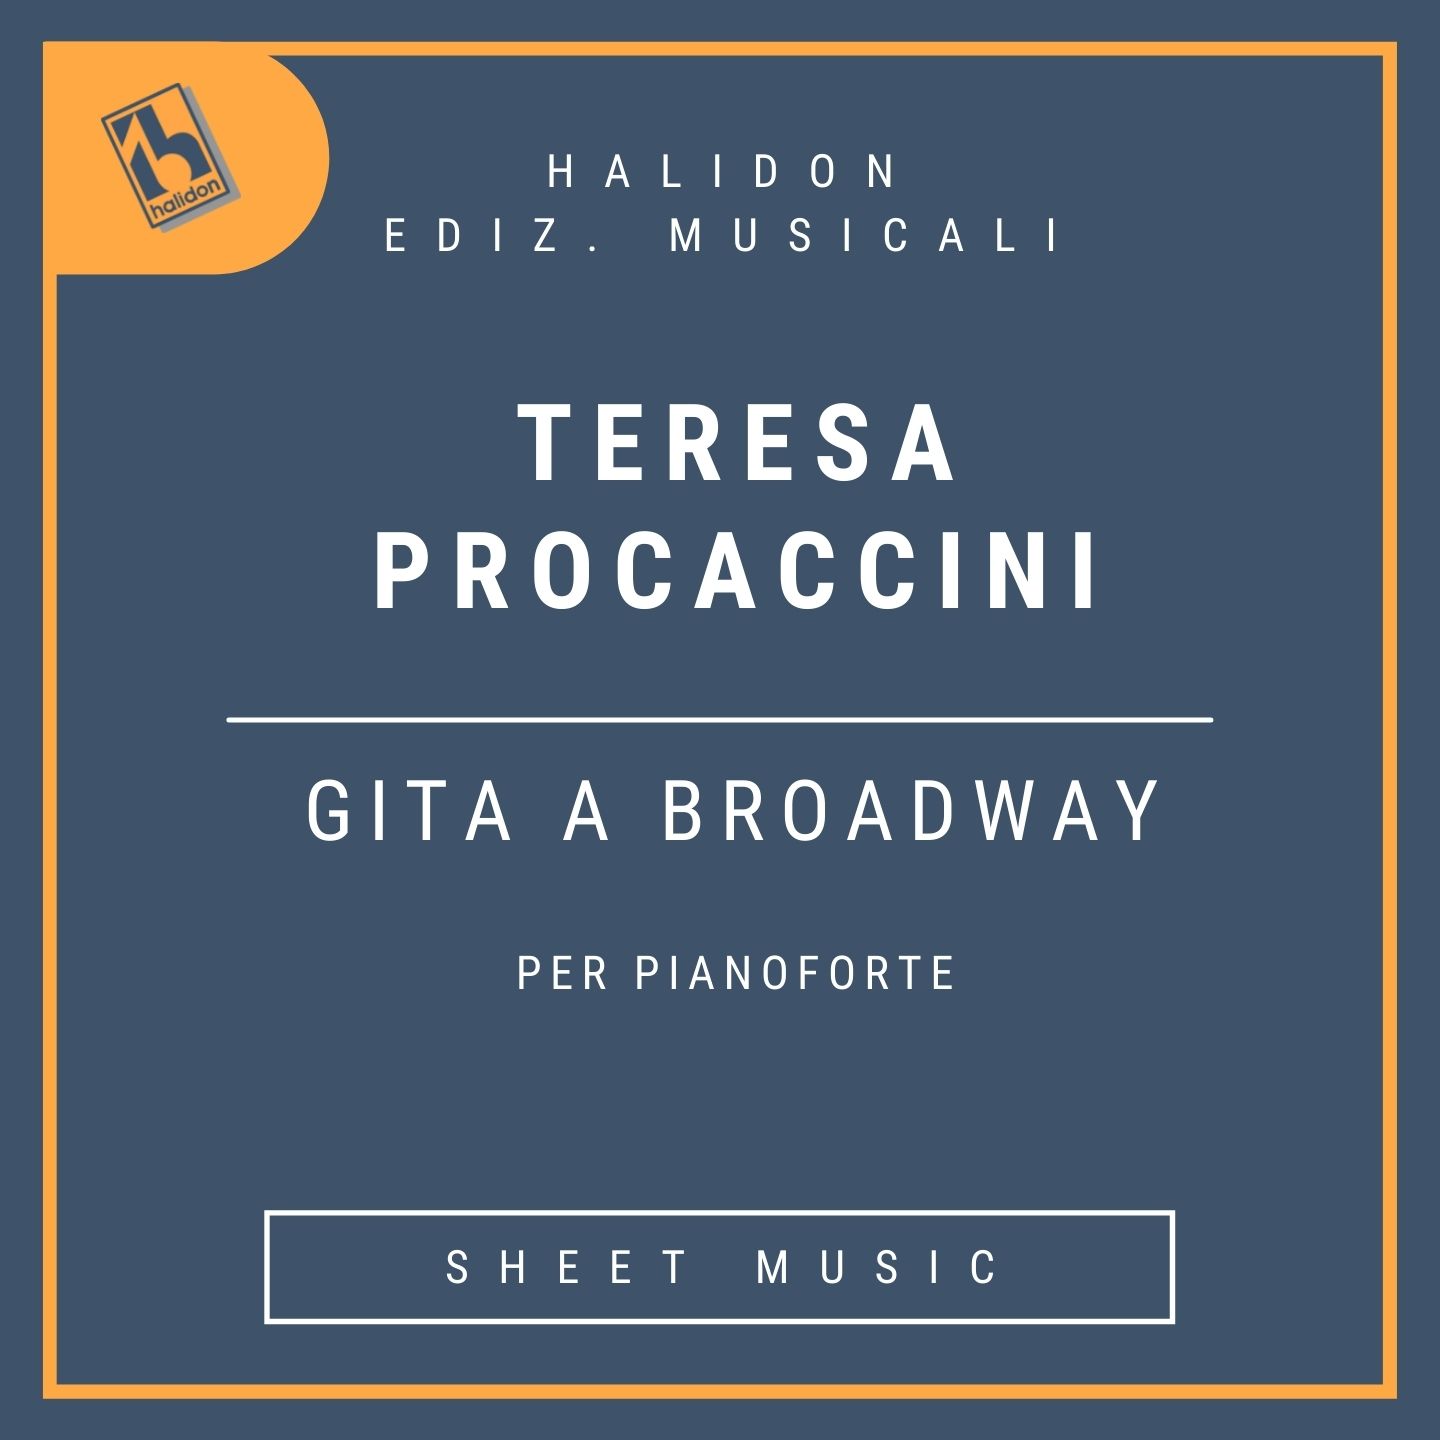 Teresa Procaccini - Gita a Broadway